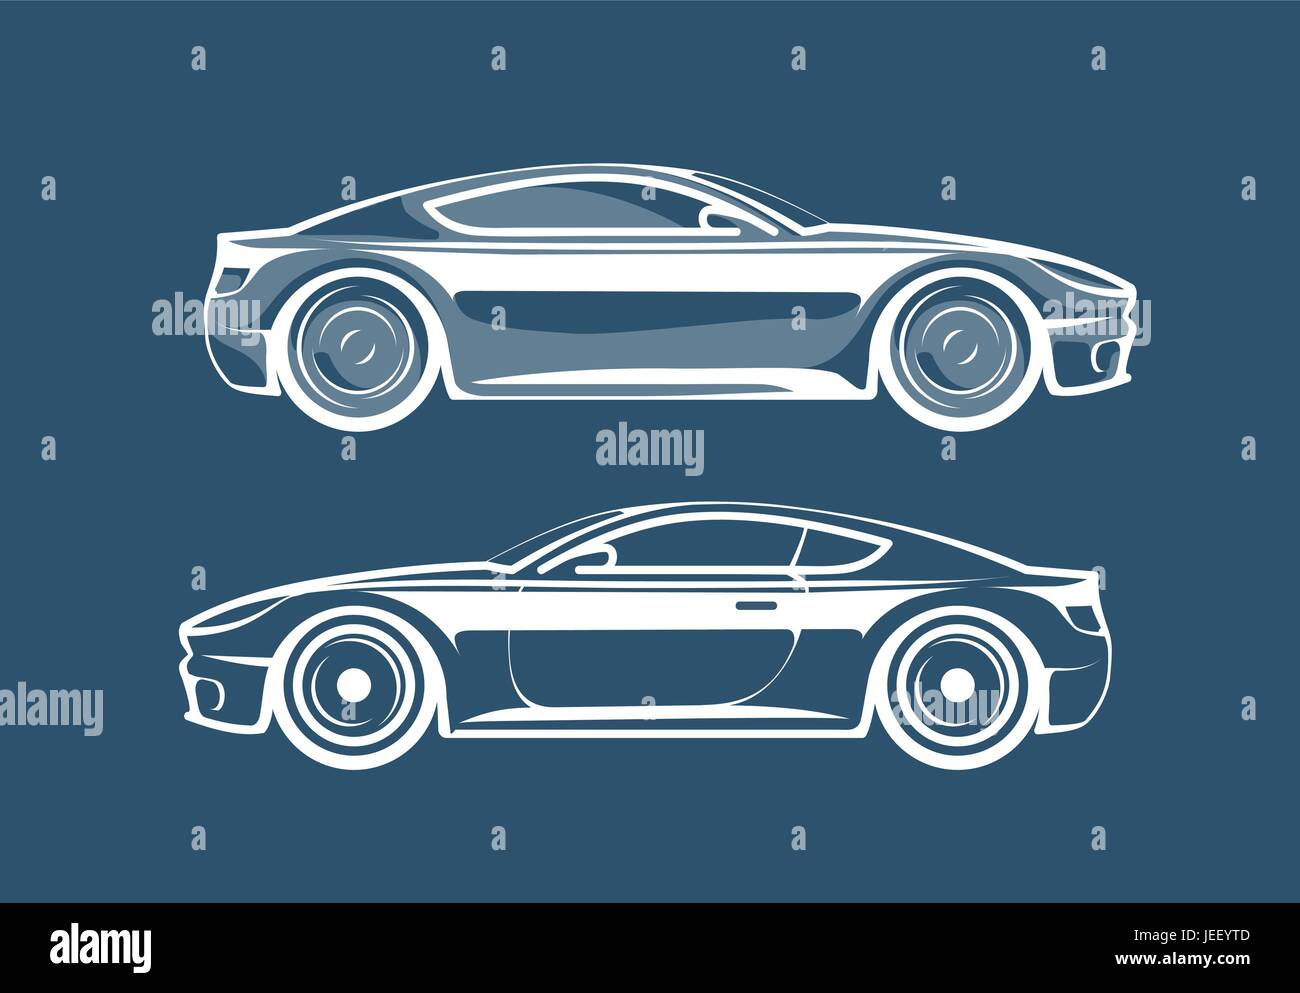 Sportwagen-Silhouette. Rasse, Fahrzeug, Automobil-Symbol oder Logo. Vektor-illustration Stock Vektor